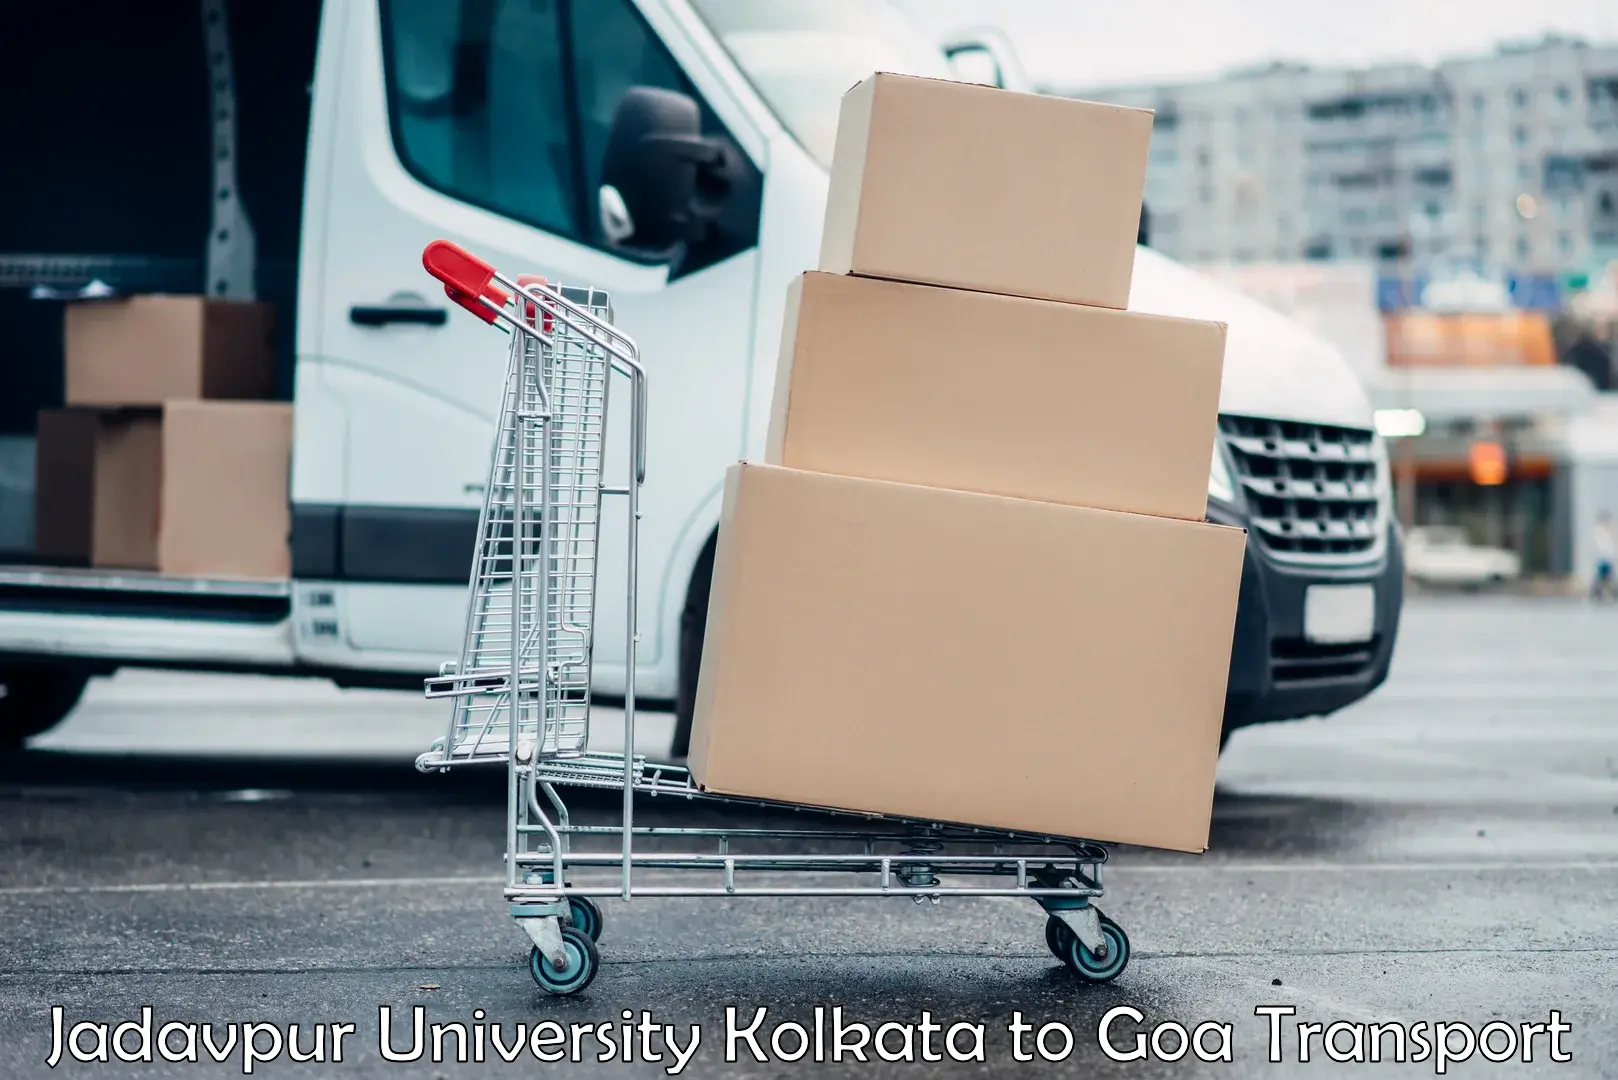 Shipping services Jadavpur University Kolkata to Goa